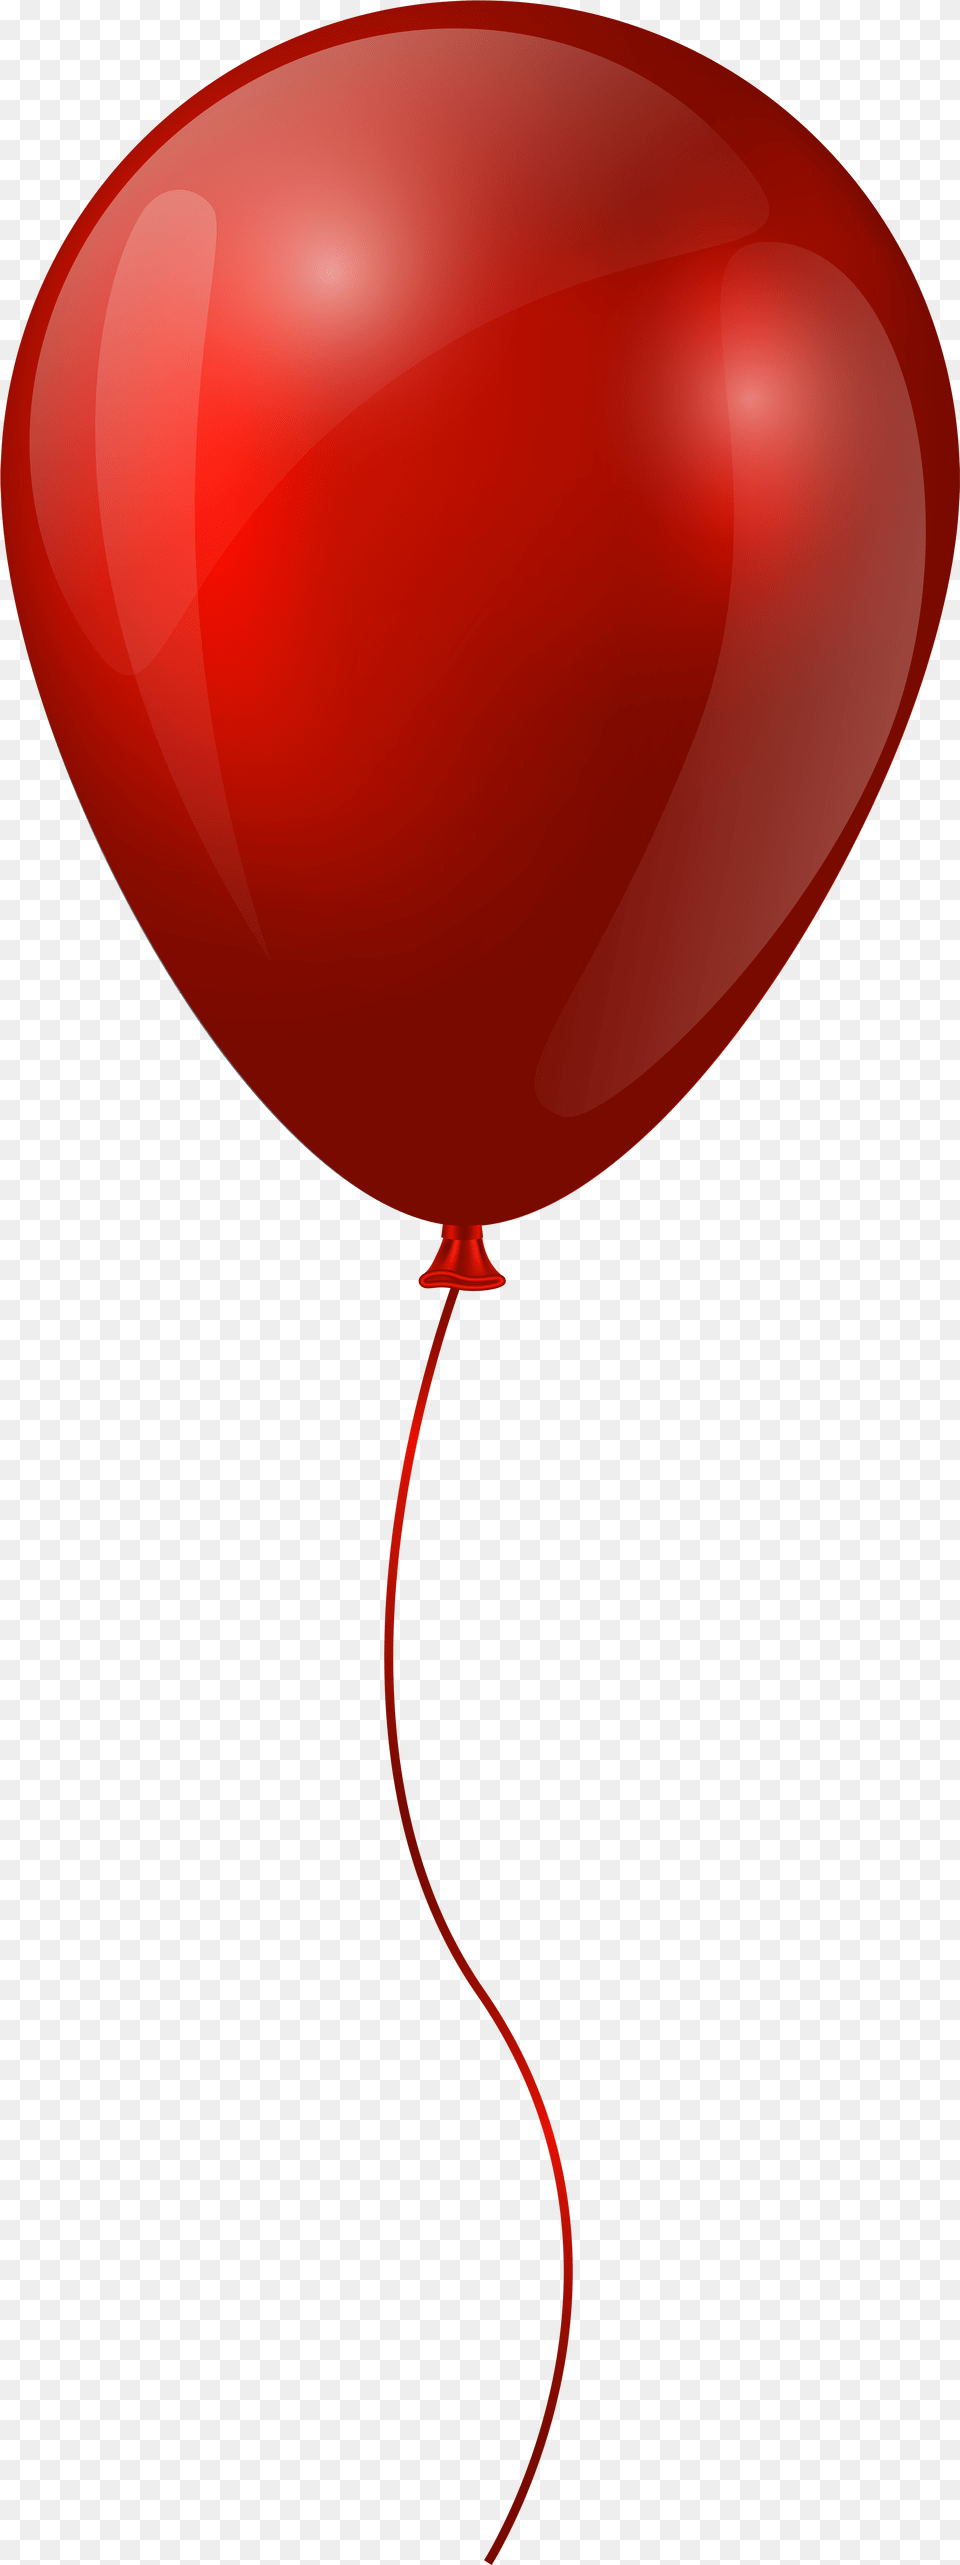 Clip Art Royalty Free Stock Balloon Transparent Clip Transparent Red Balloon Clipart Png Image